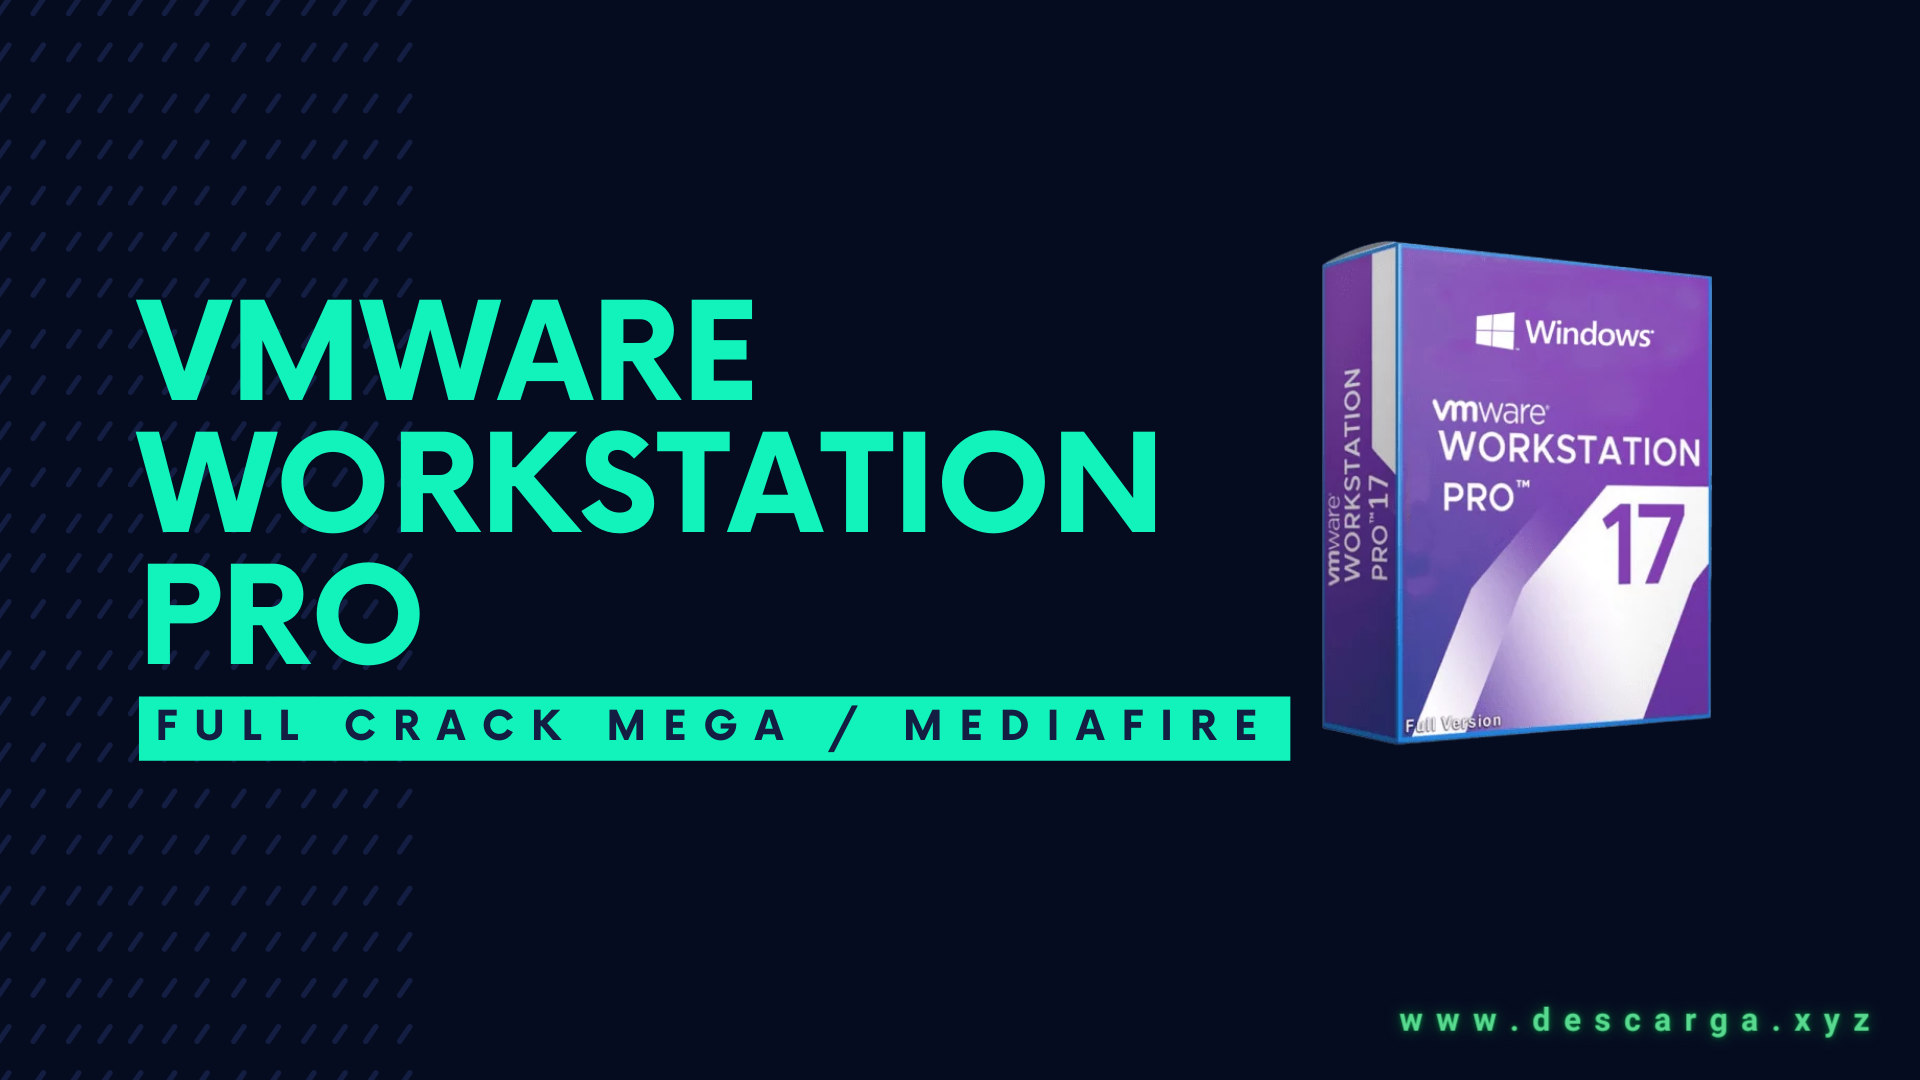 VMware Workstation Pro Full Crack descargar gratis